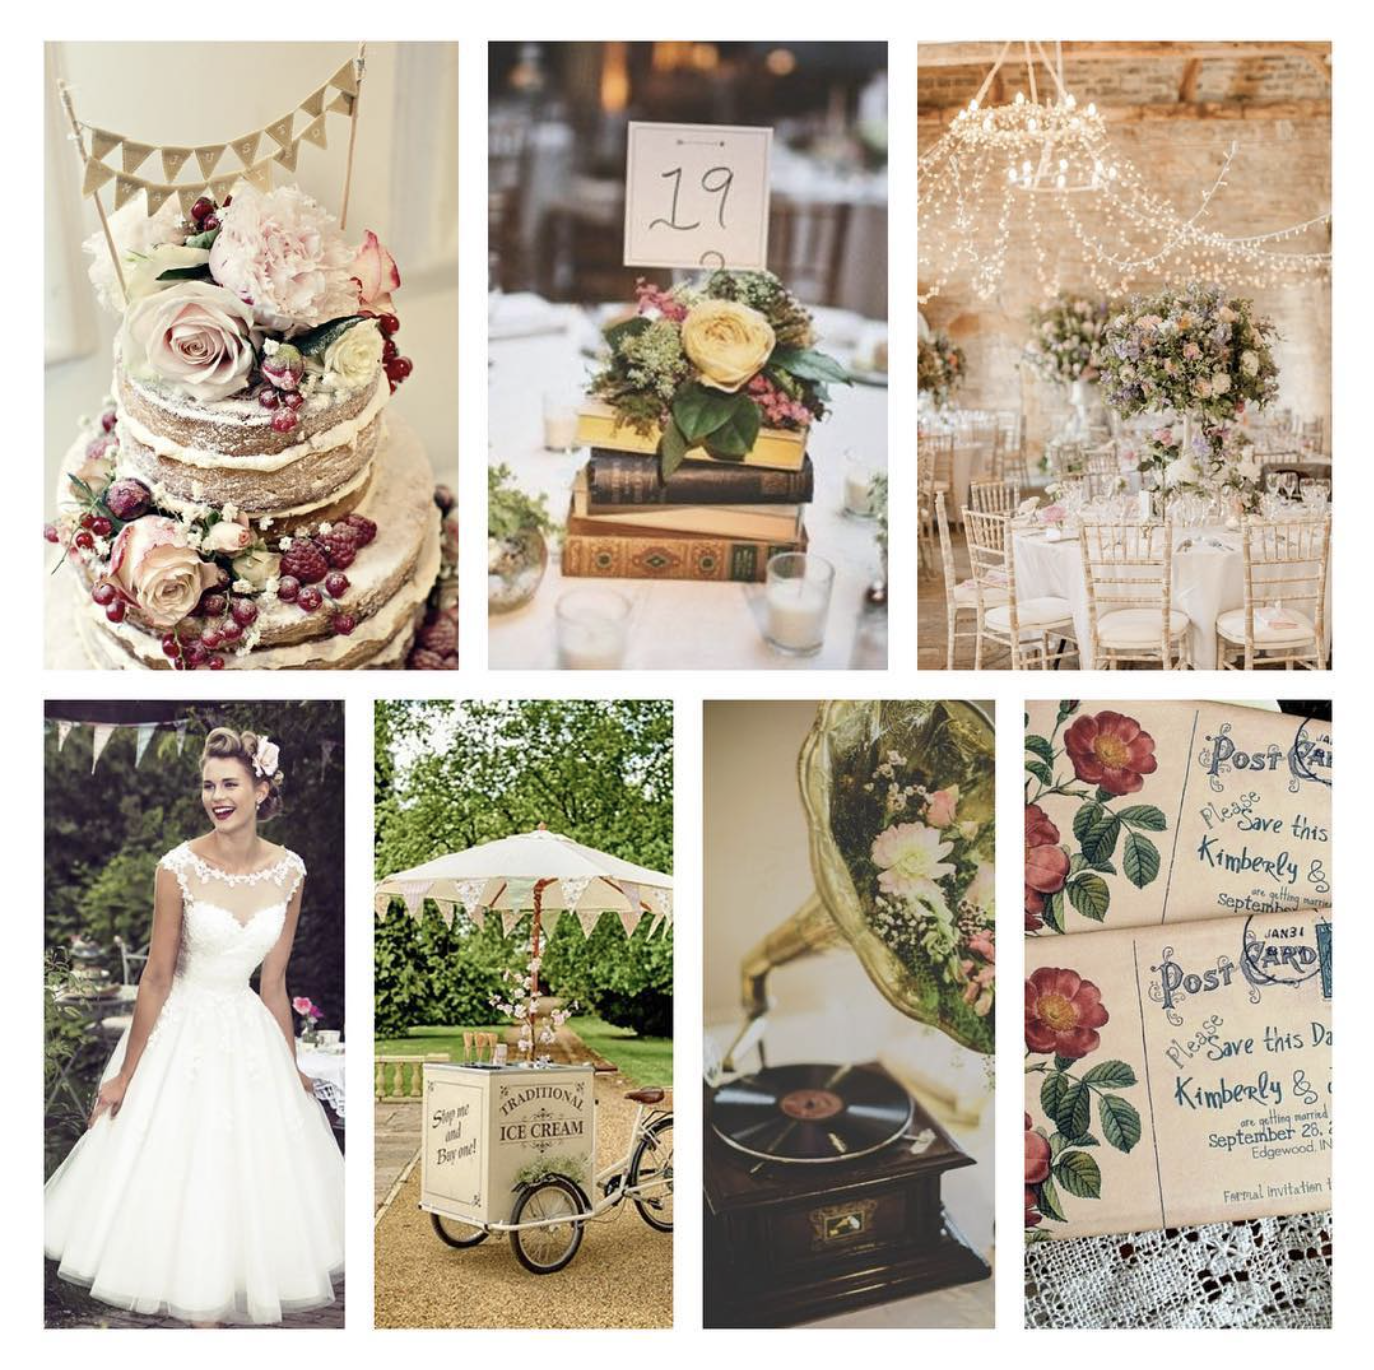 Vintage Decor Wedding Tips, vintage wedding cake and bunting, an ice cream cart wedding invitations and vintage wedding decorations